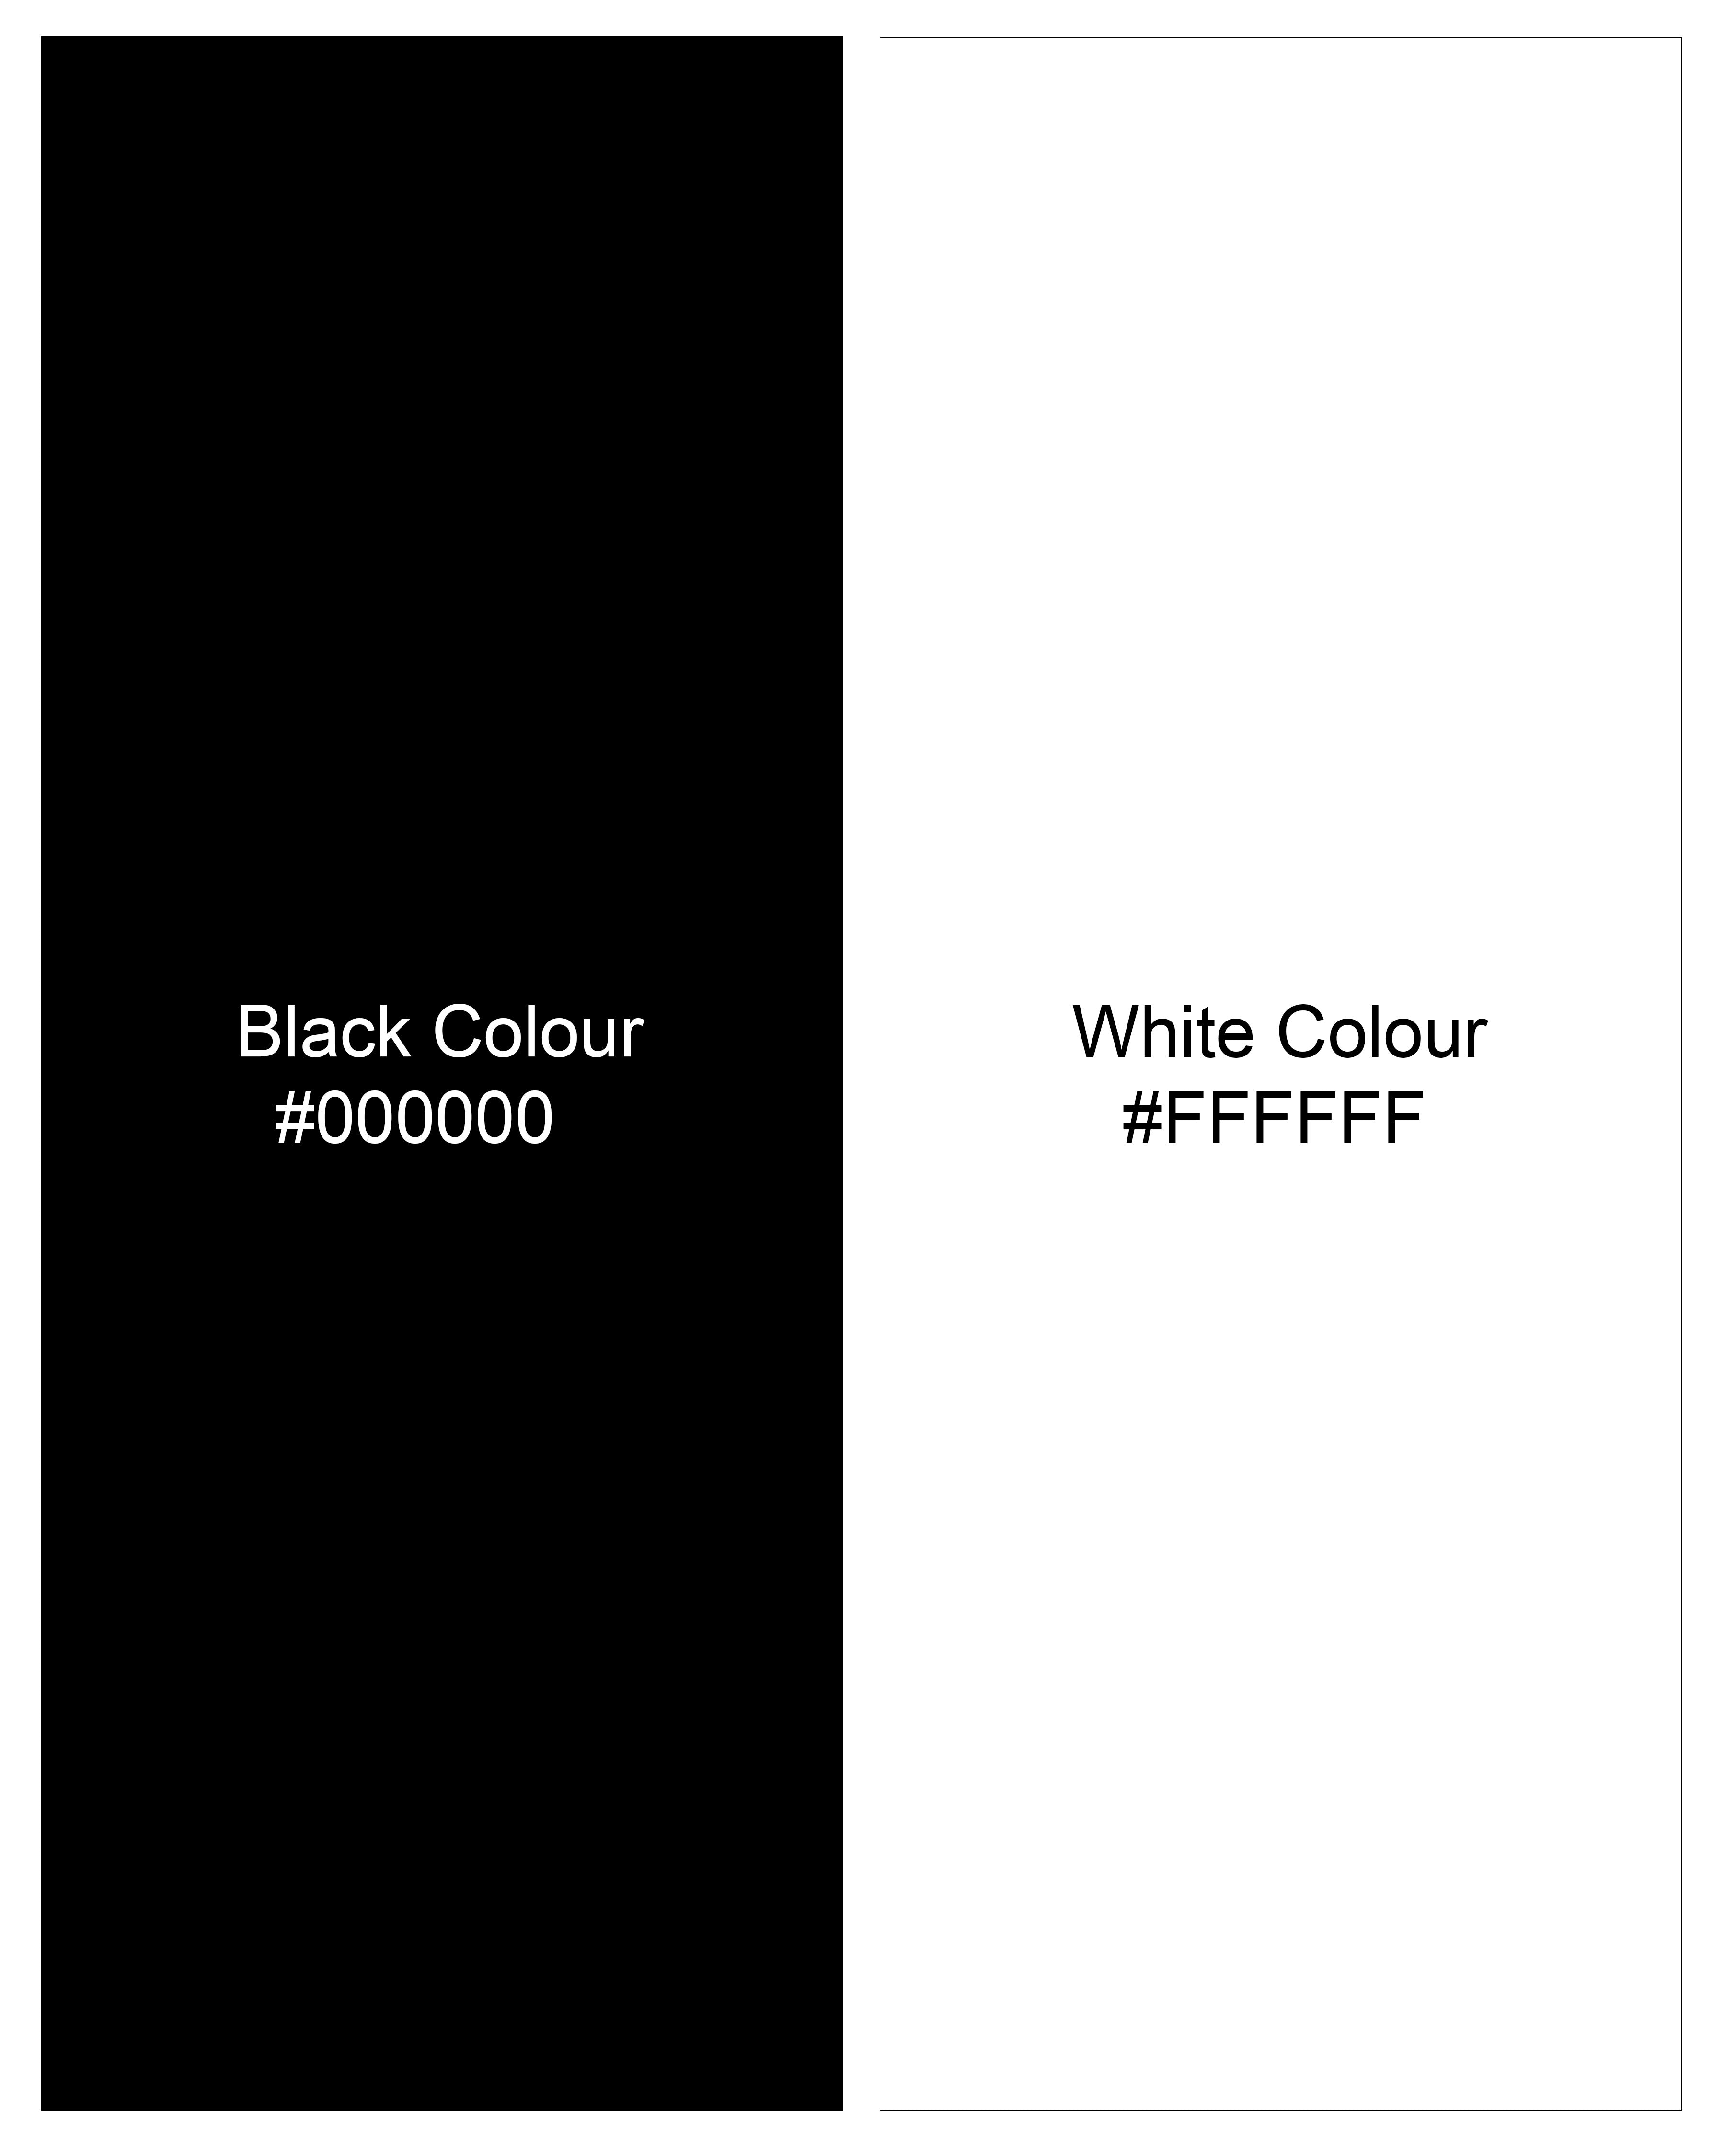 Jade Black with White Striped Premium Tencel Shirt 9068-BLK-38, 9068-BLK-H-38, 9068-BLK-39, 9068-BLK-H-39, 9068-BLK-40, 9068-BLK-H-40, 9068-BLK-42, 9068-BLK-H-42, 9068-BLK-44, 9068-BLK-H-44, 9068-BLK-46, 9068-BLK-H-46, 9068-BLK-48, 9068-BLK-H-48, 9068-BLK-50, 9068-BLK-H-50, 9068-BLK-52, 9068-BLK-H-52